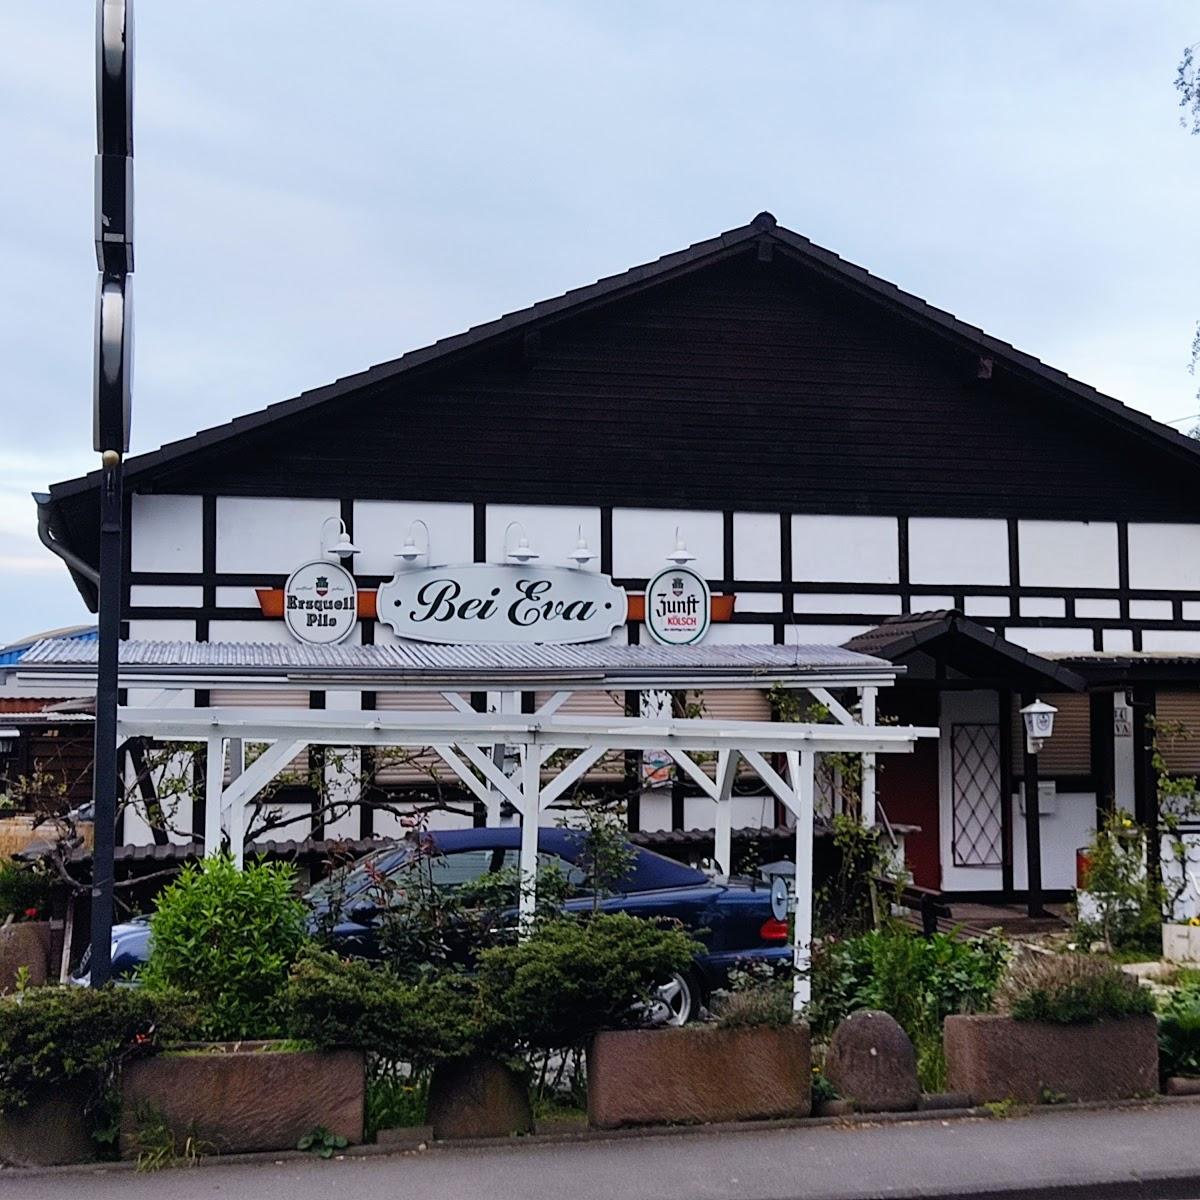 Restaurant "Bei Eva" in Niederkassel